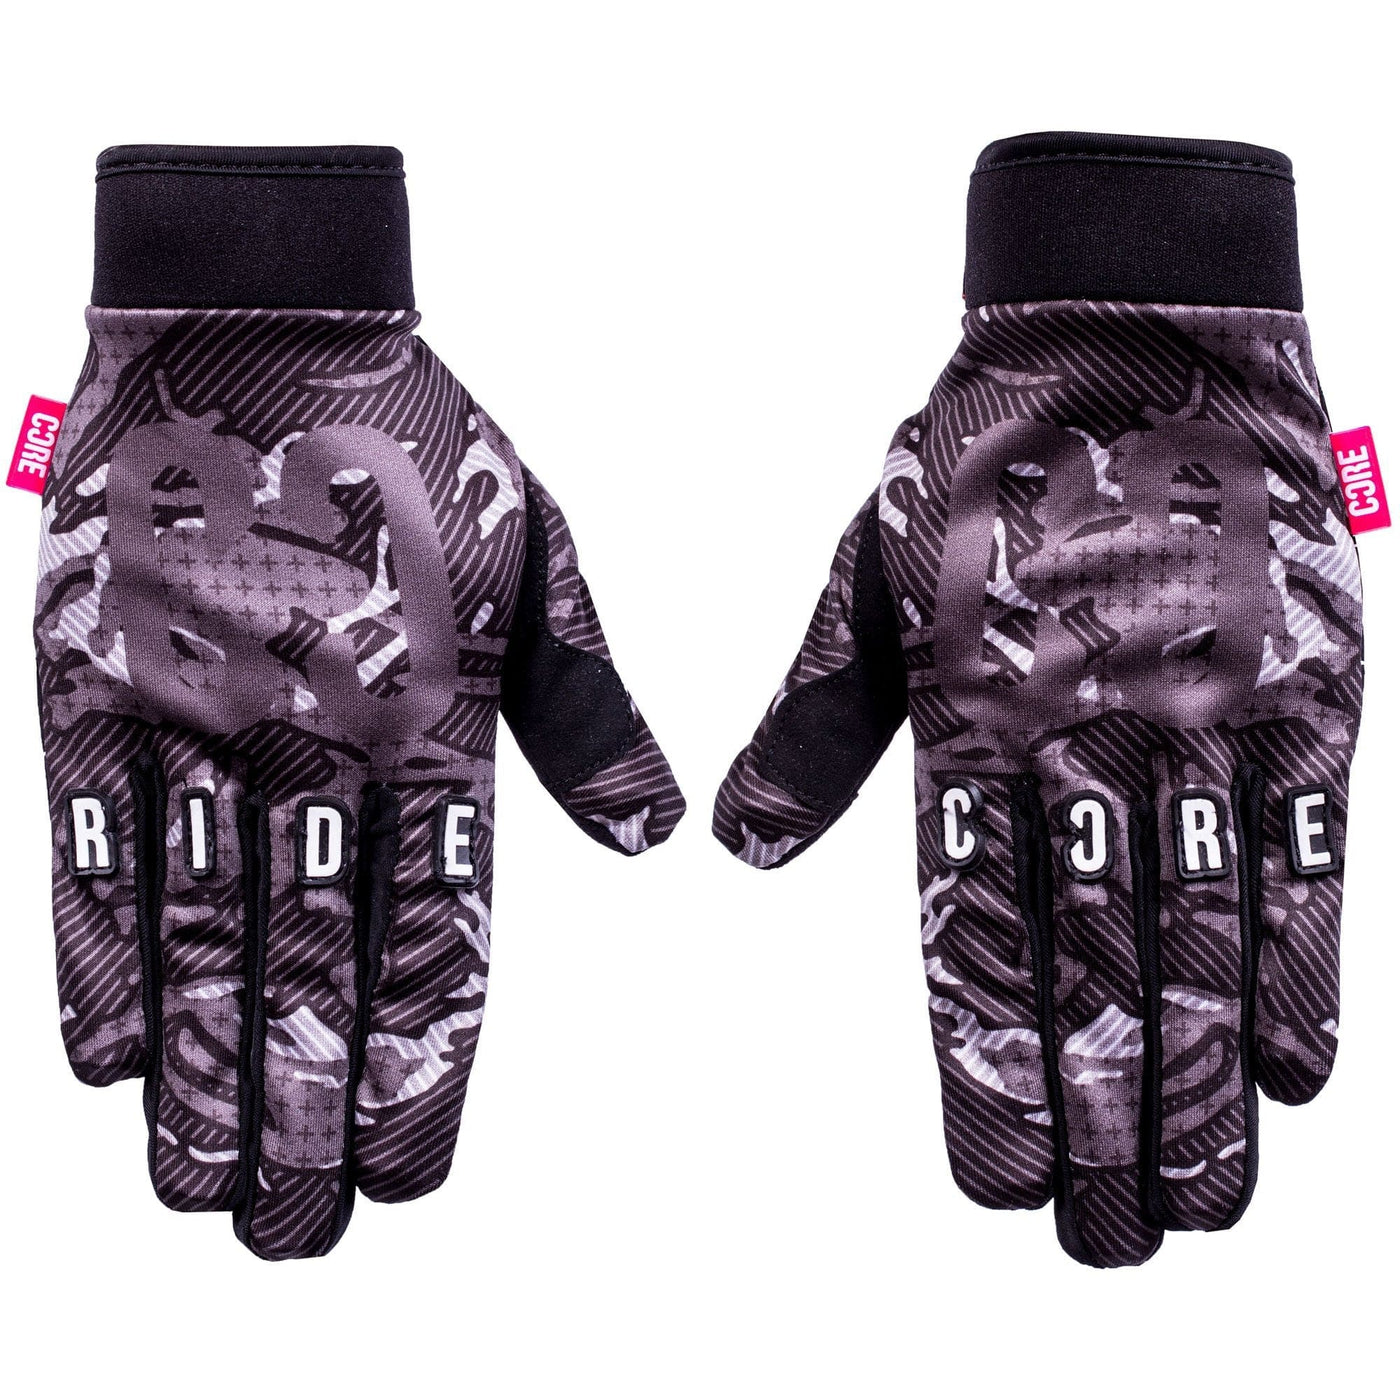 CORE Protection BMX Gloves Black Camo I Bike Gloves Both Top